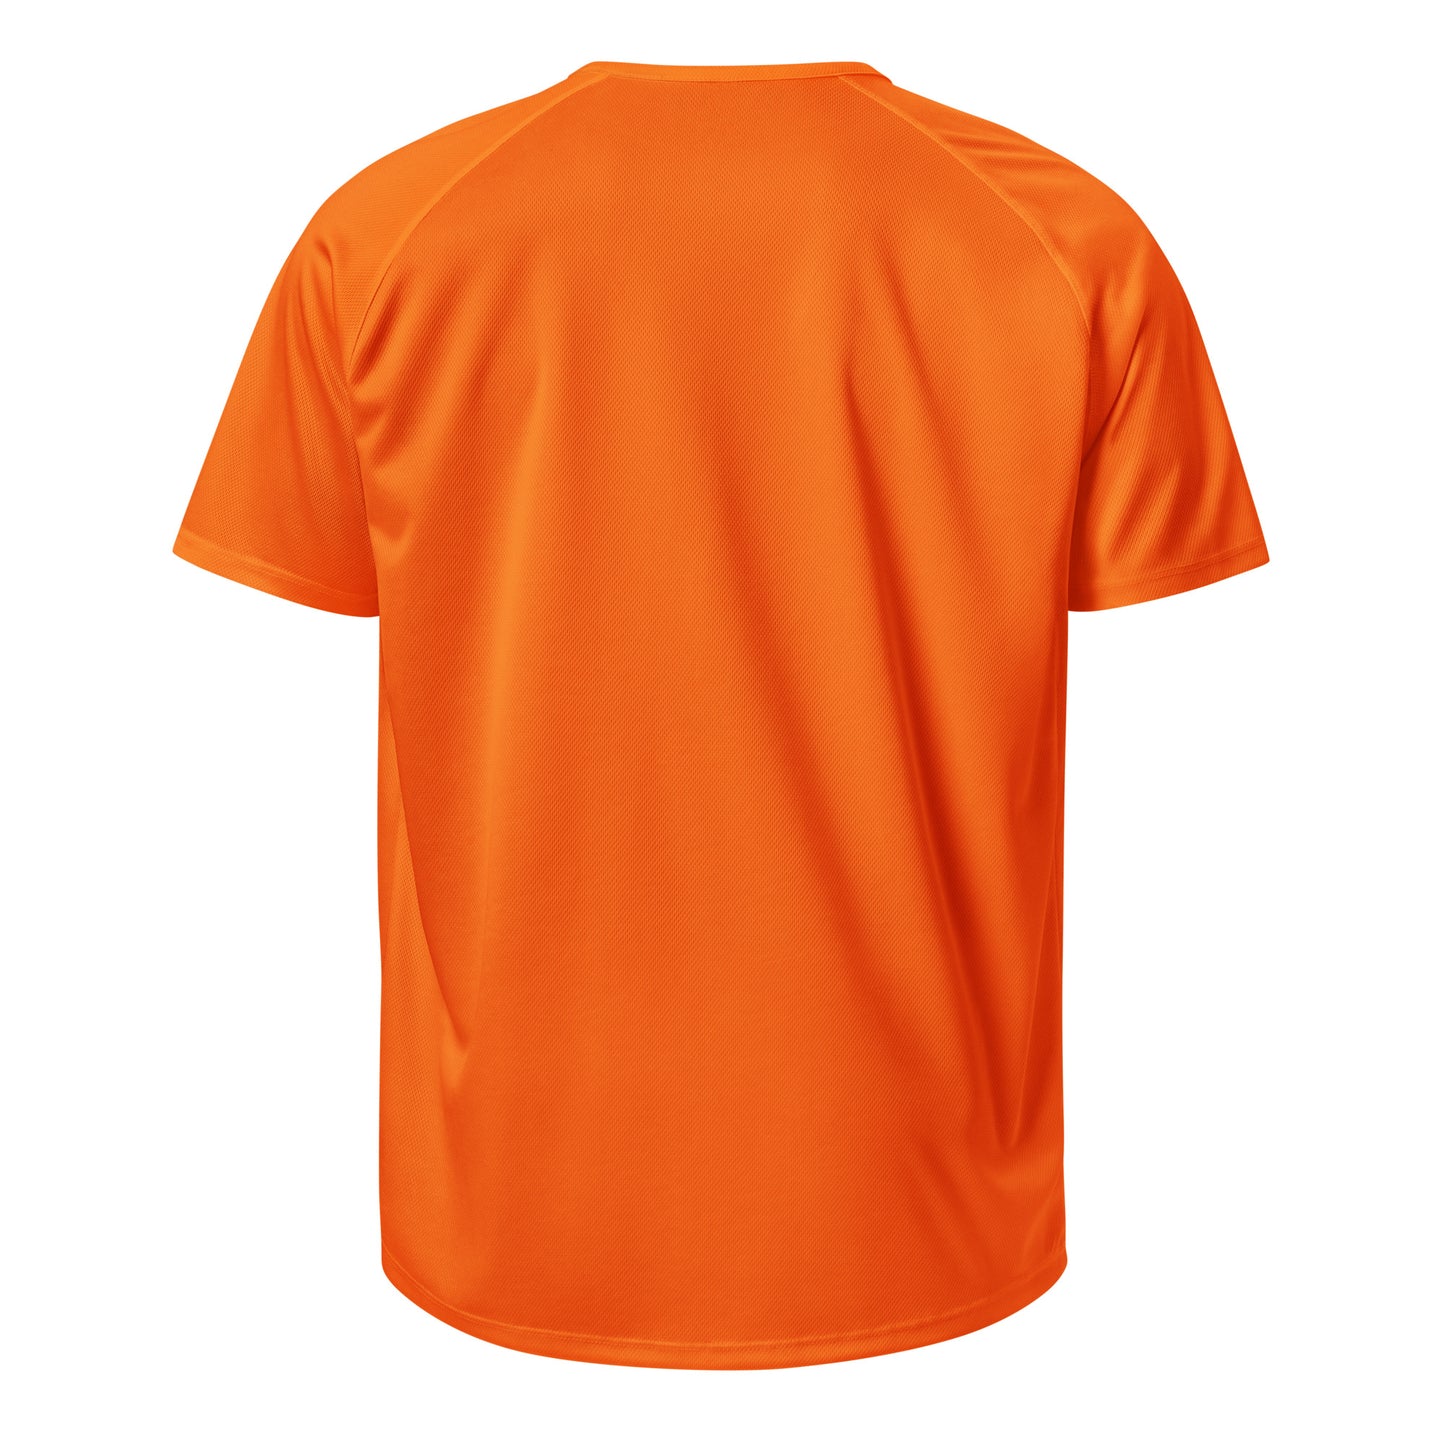 E122 - Sports/Breathable Fabric (Universal jump/woman : Orange)